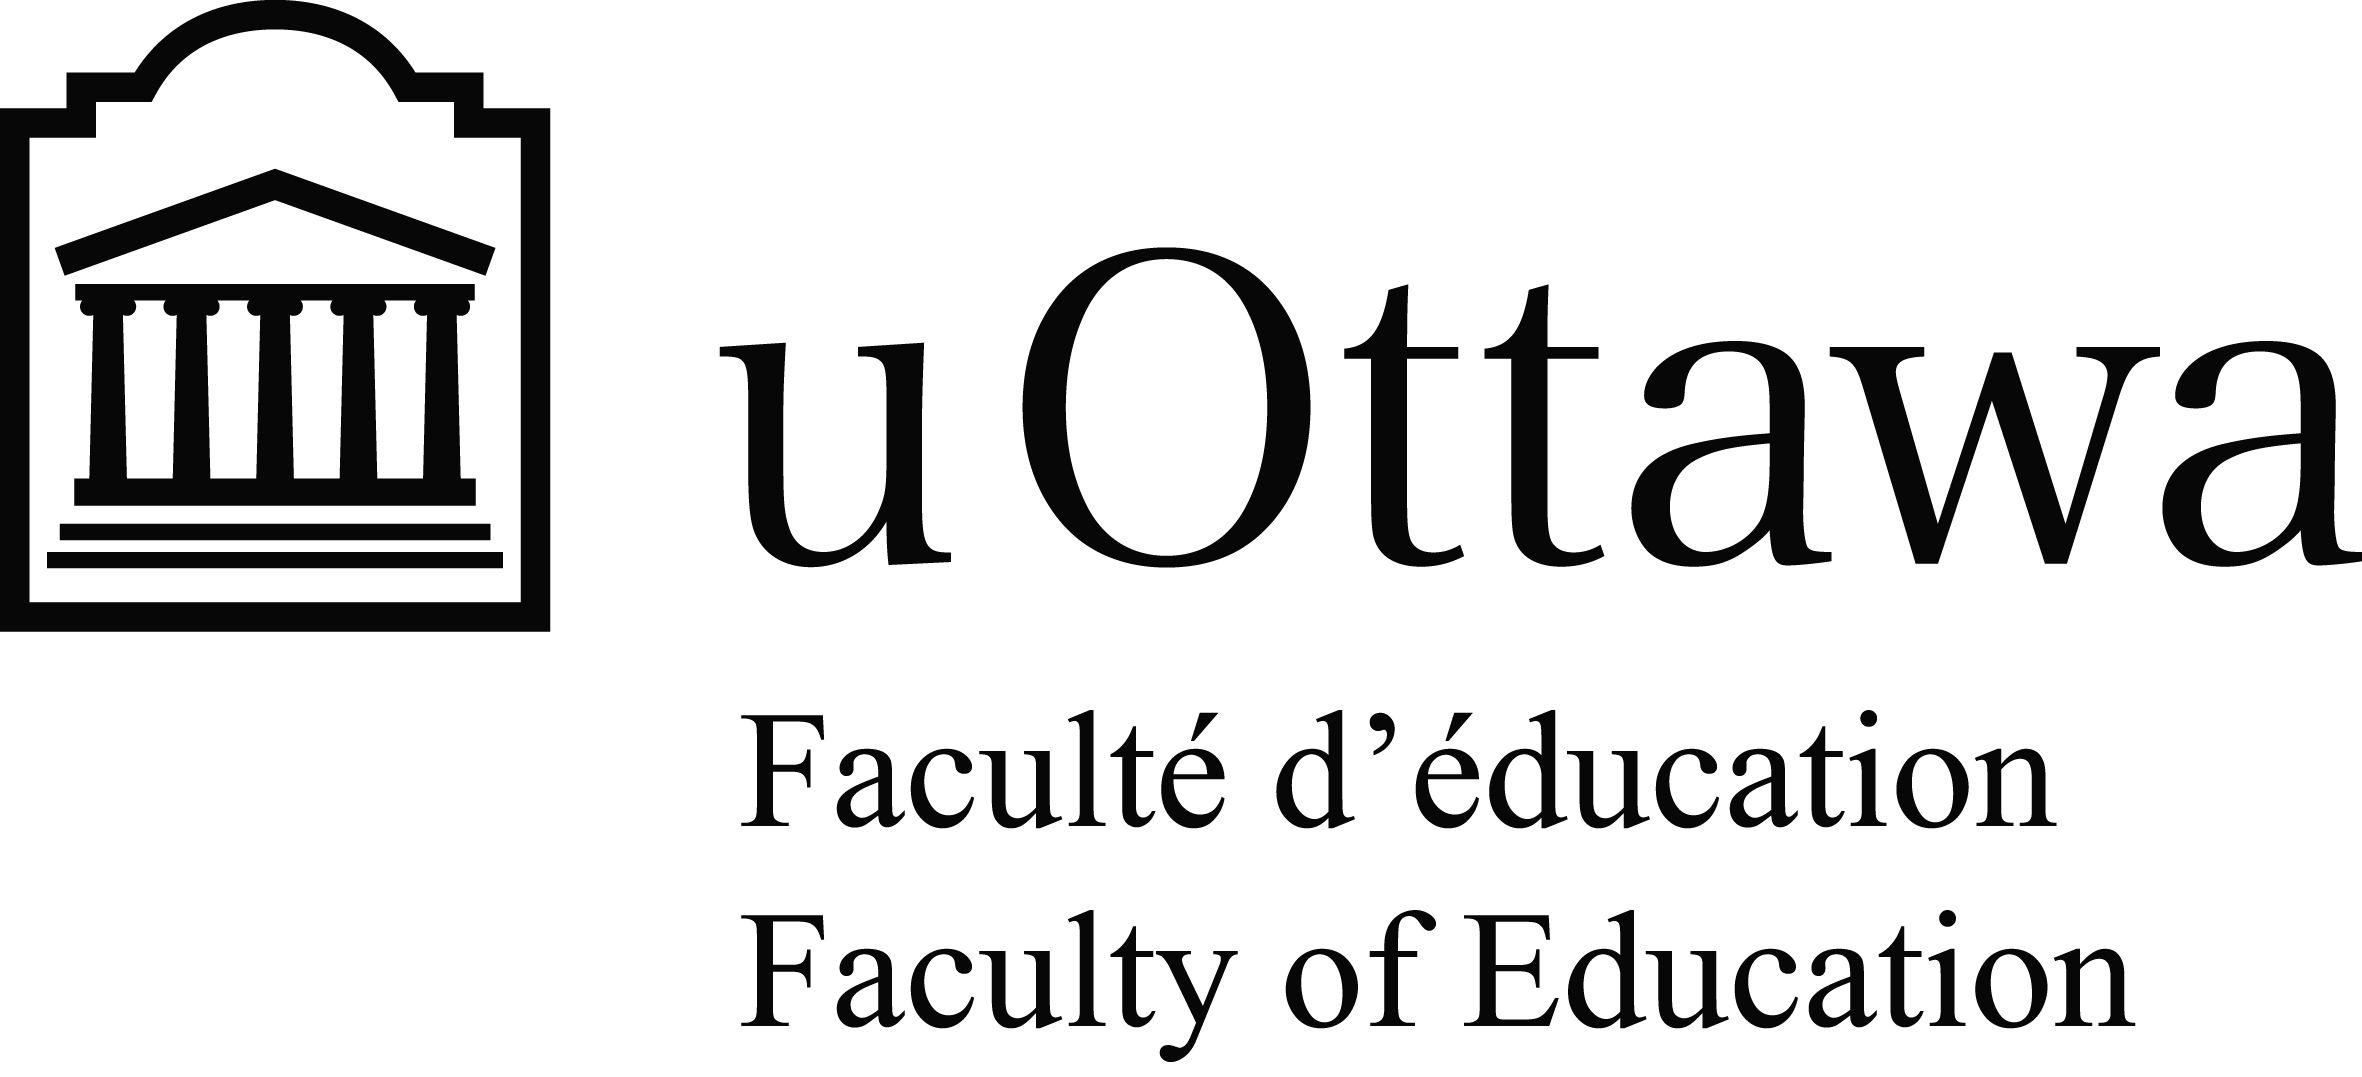 U of O Logo - Logos and templates. Faculty of Education. University of Ottawa